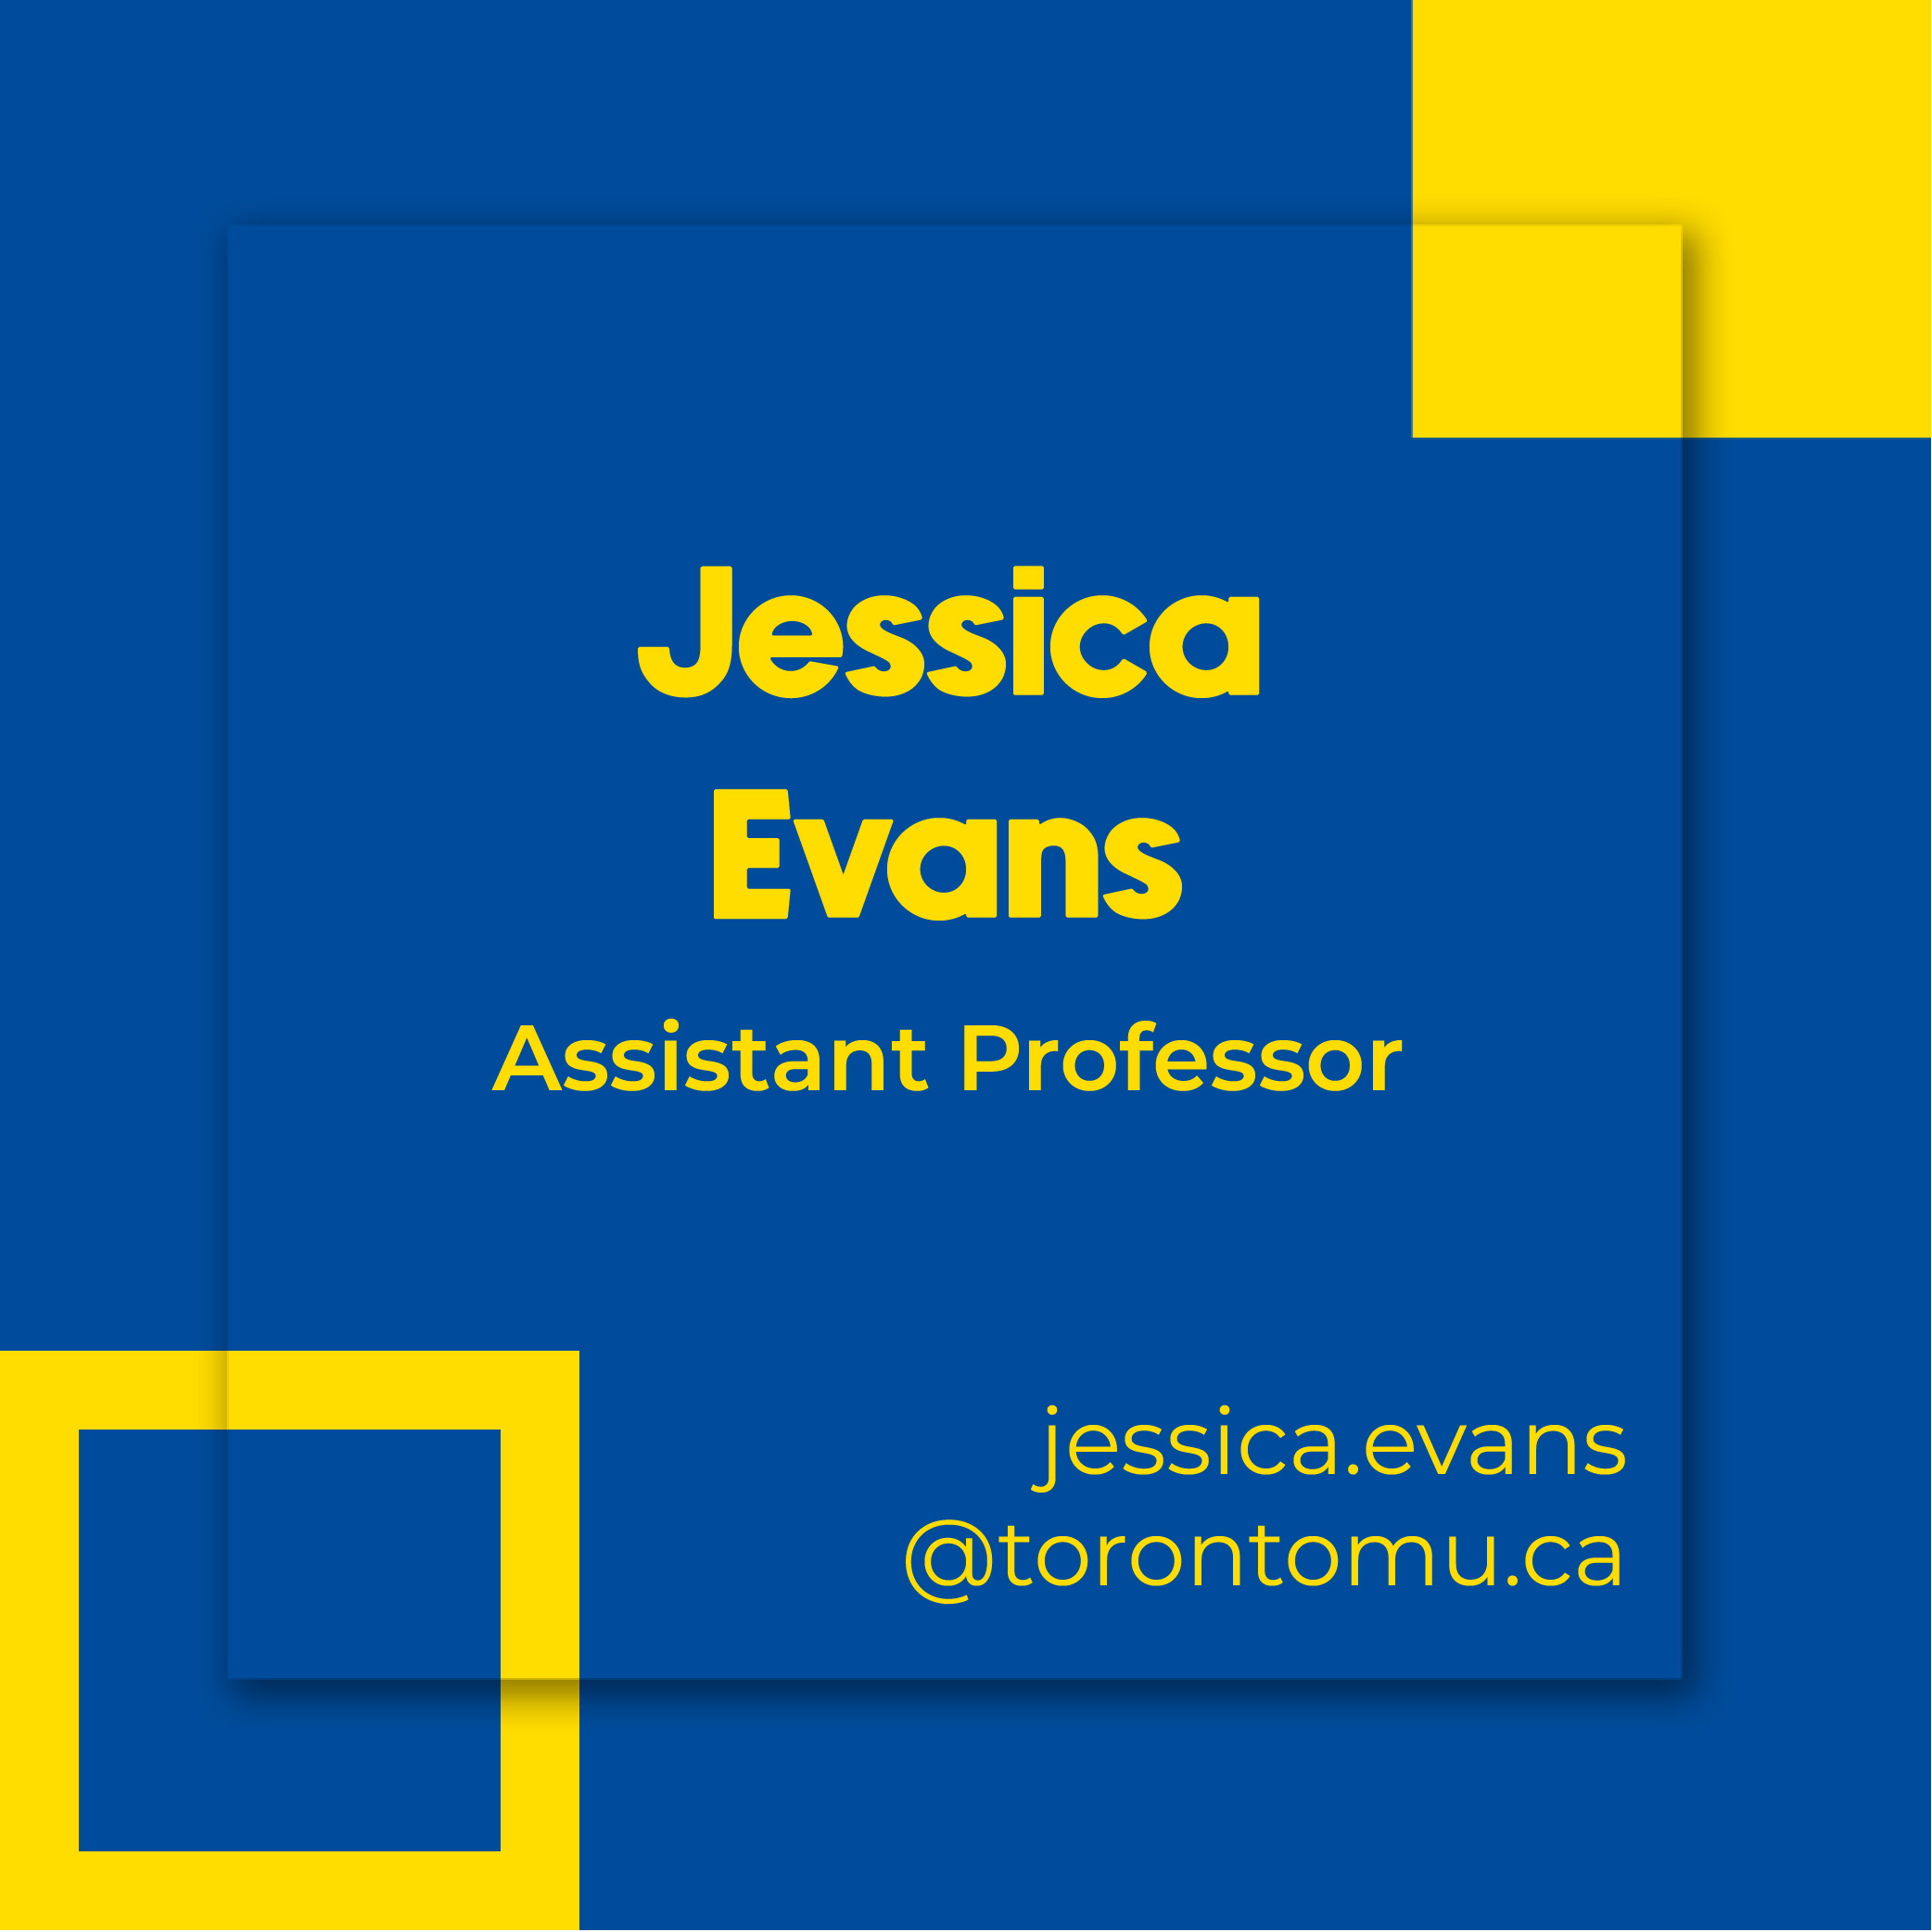 Jessica Evans, Assistant Professor